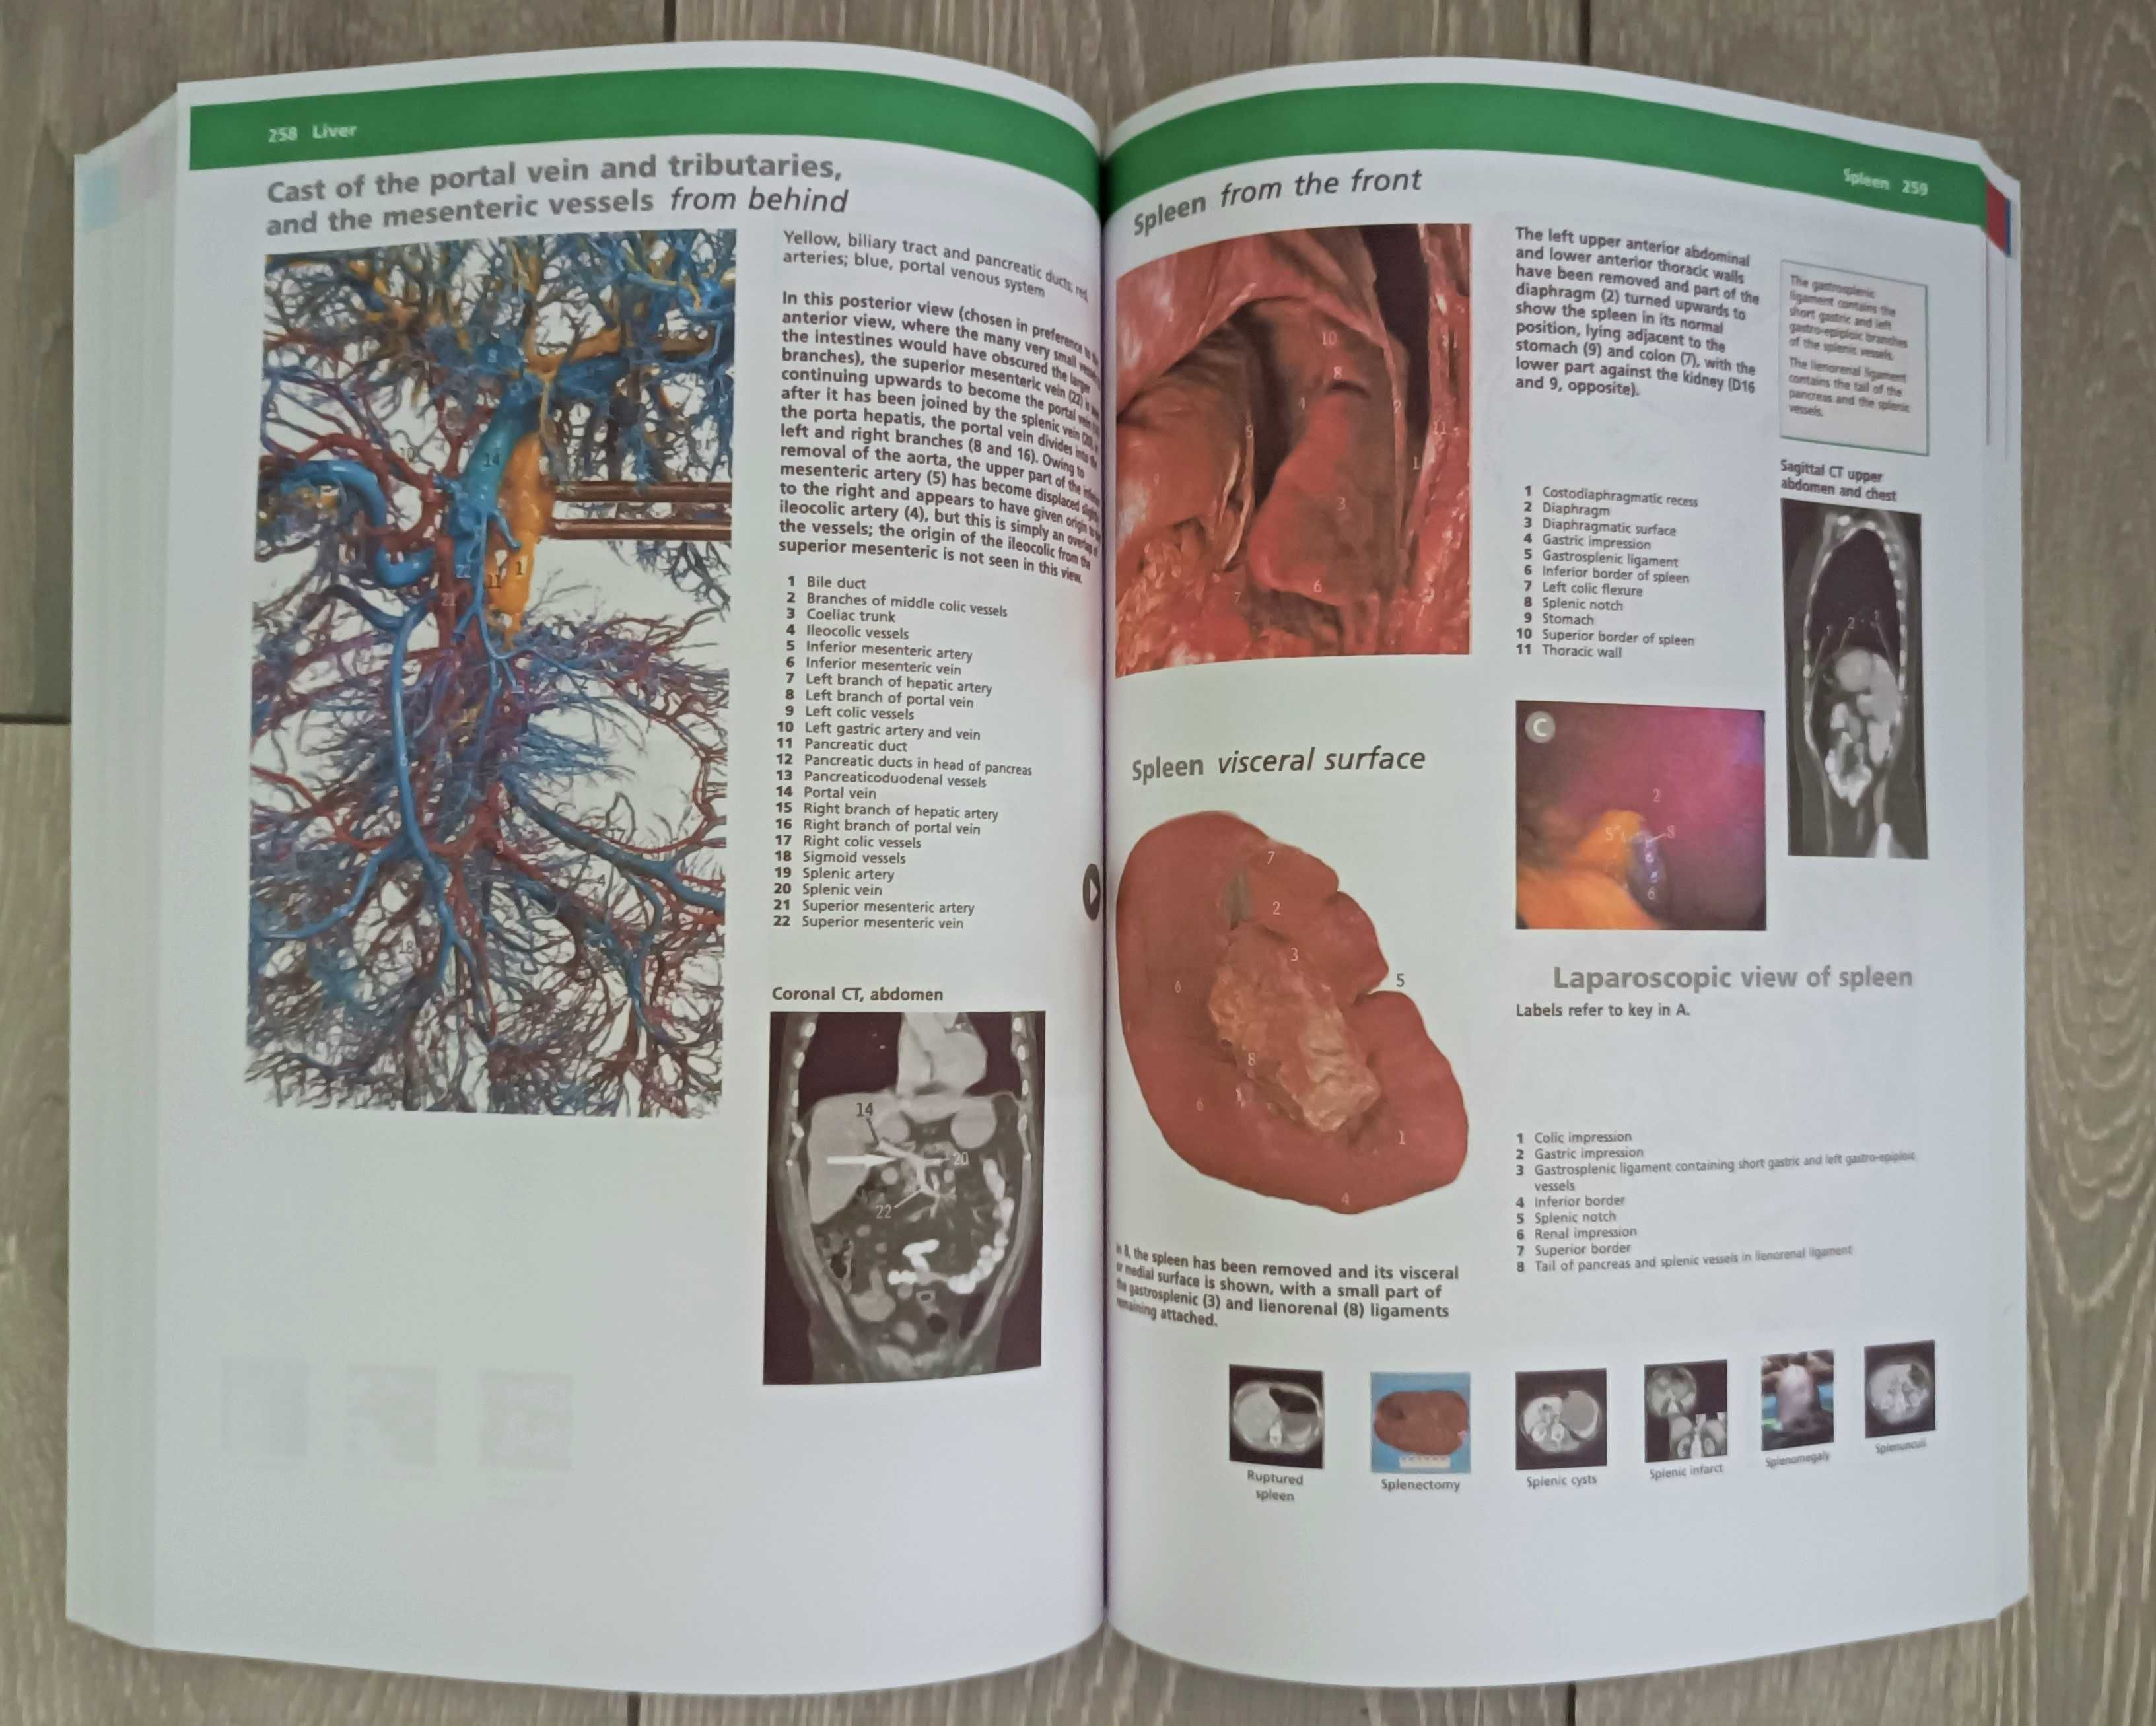 Abrahams' and McMinn's Clinical Atlas of Human Anatomy/ Anatomie ed. 8